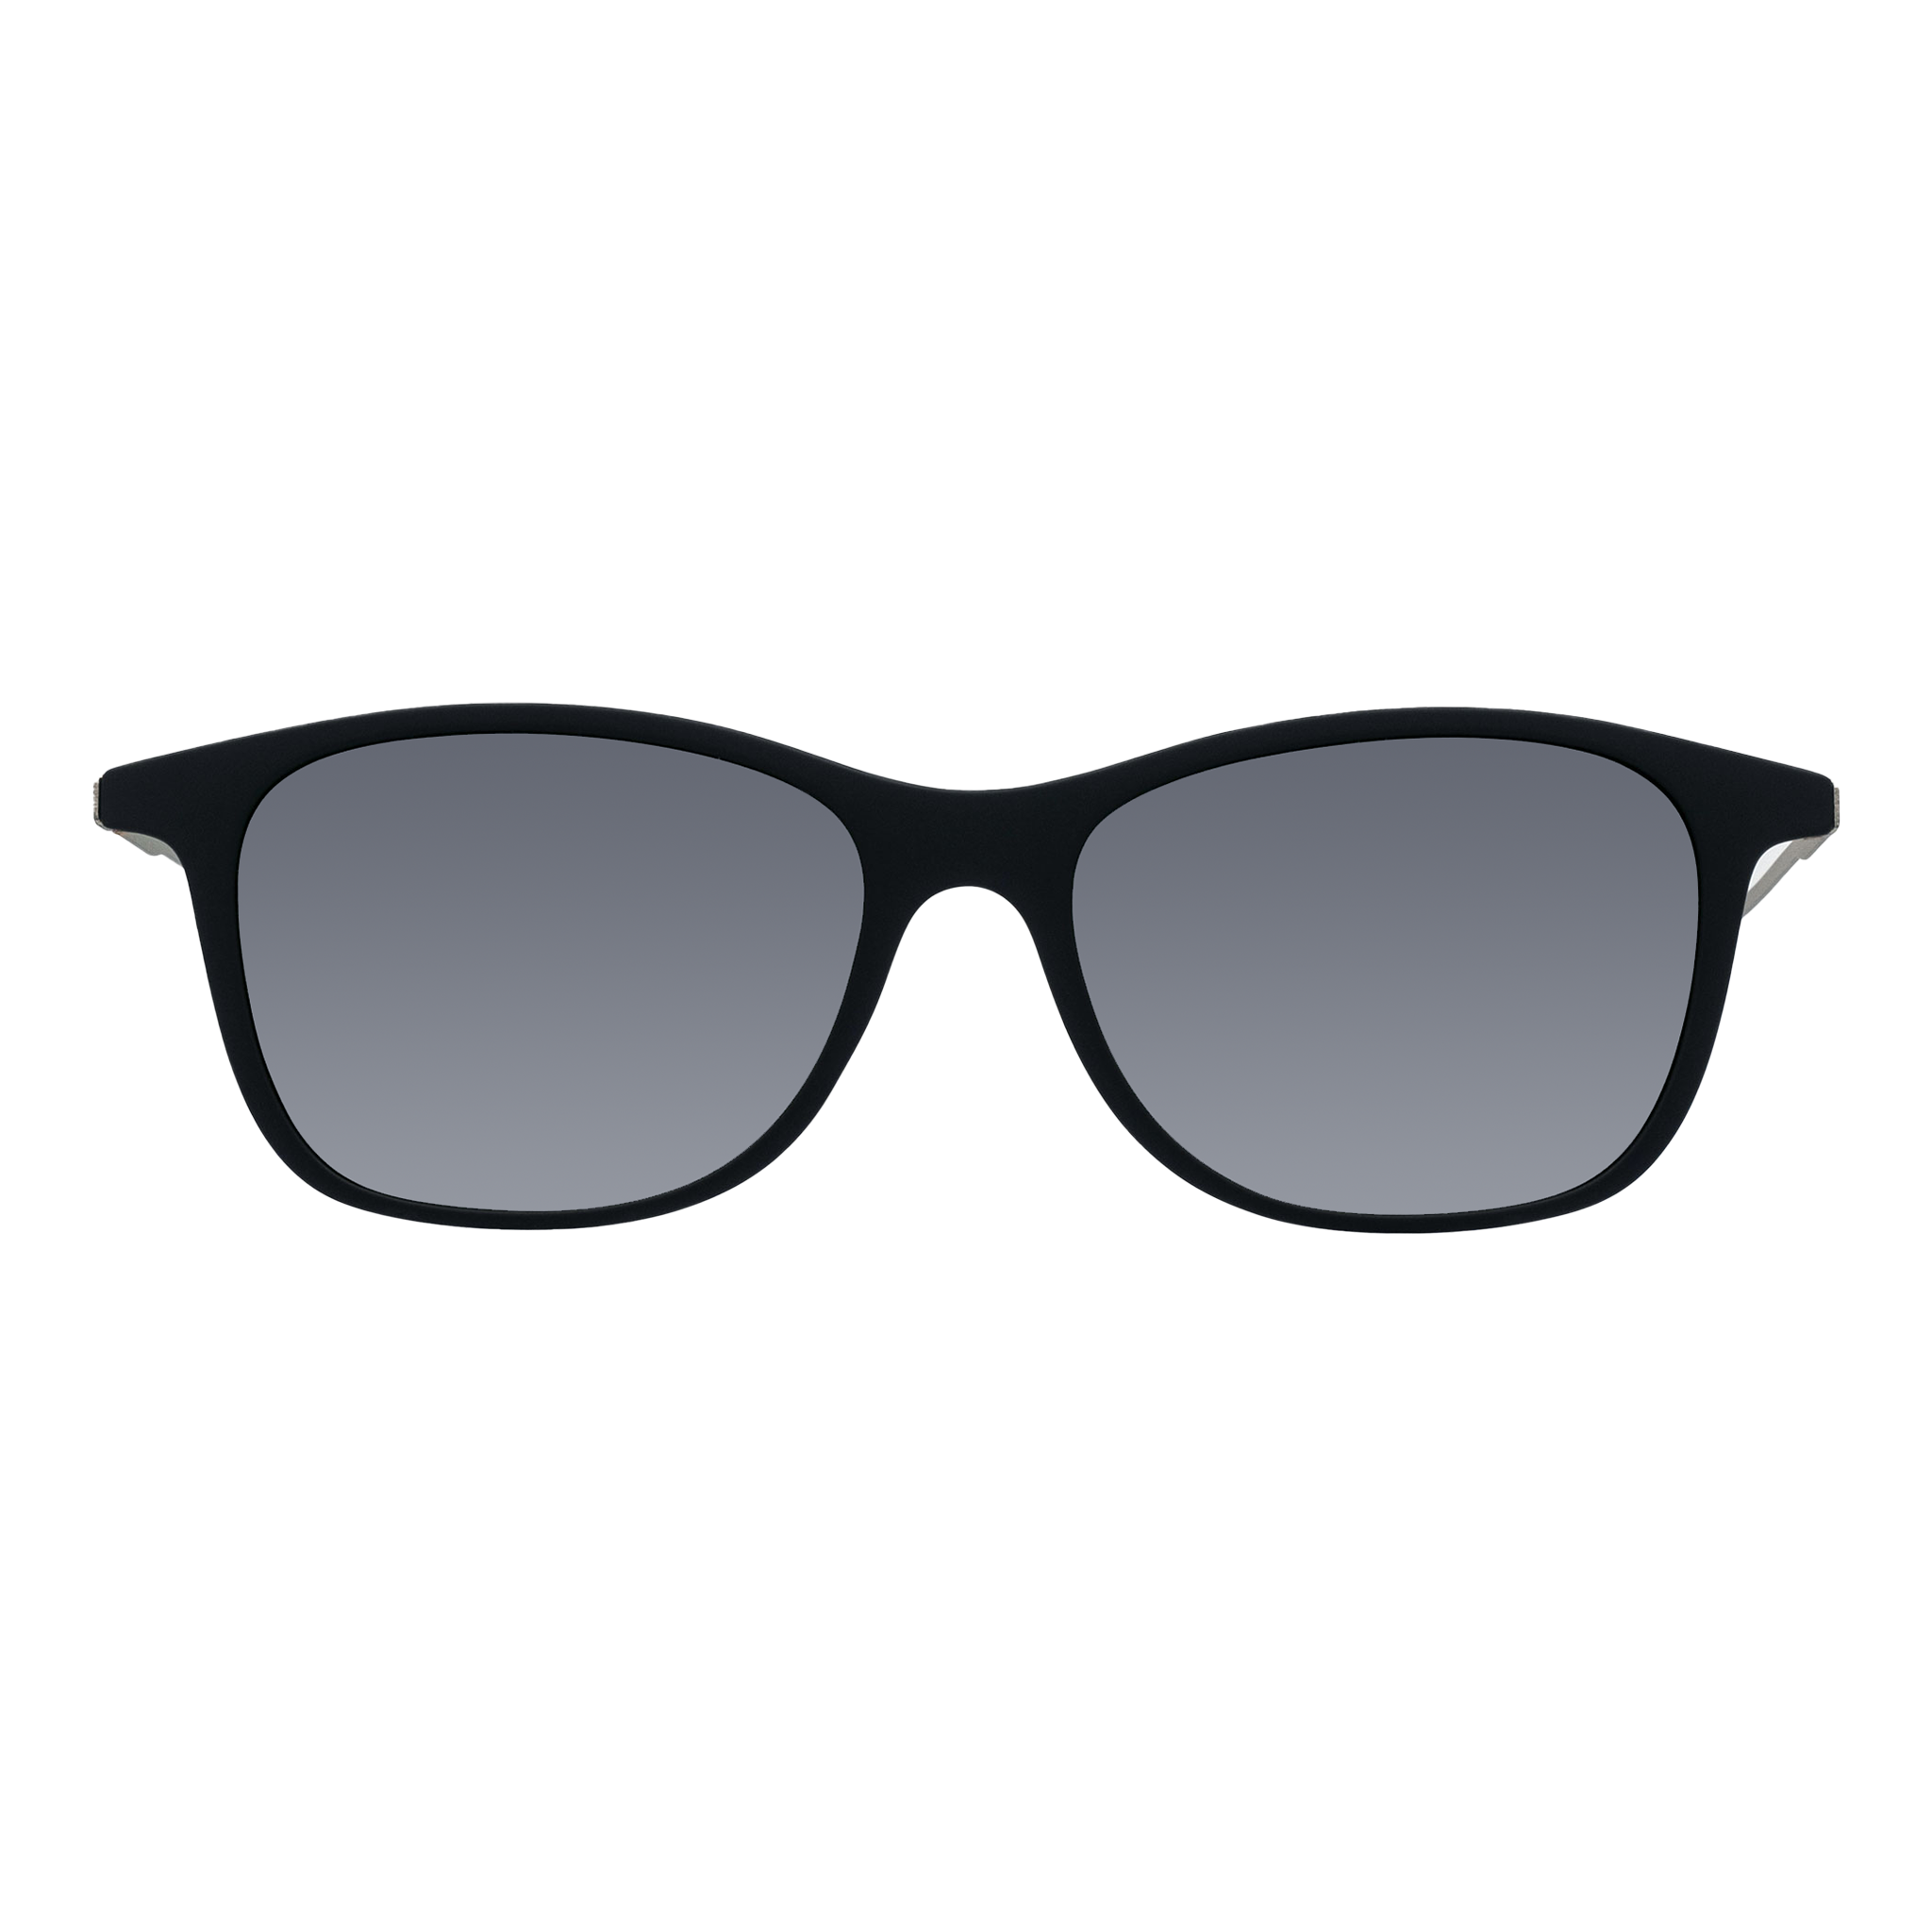 Menlo Park Sunglasses